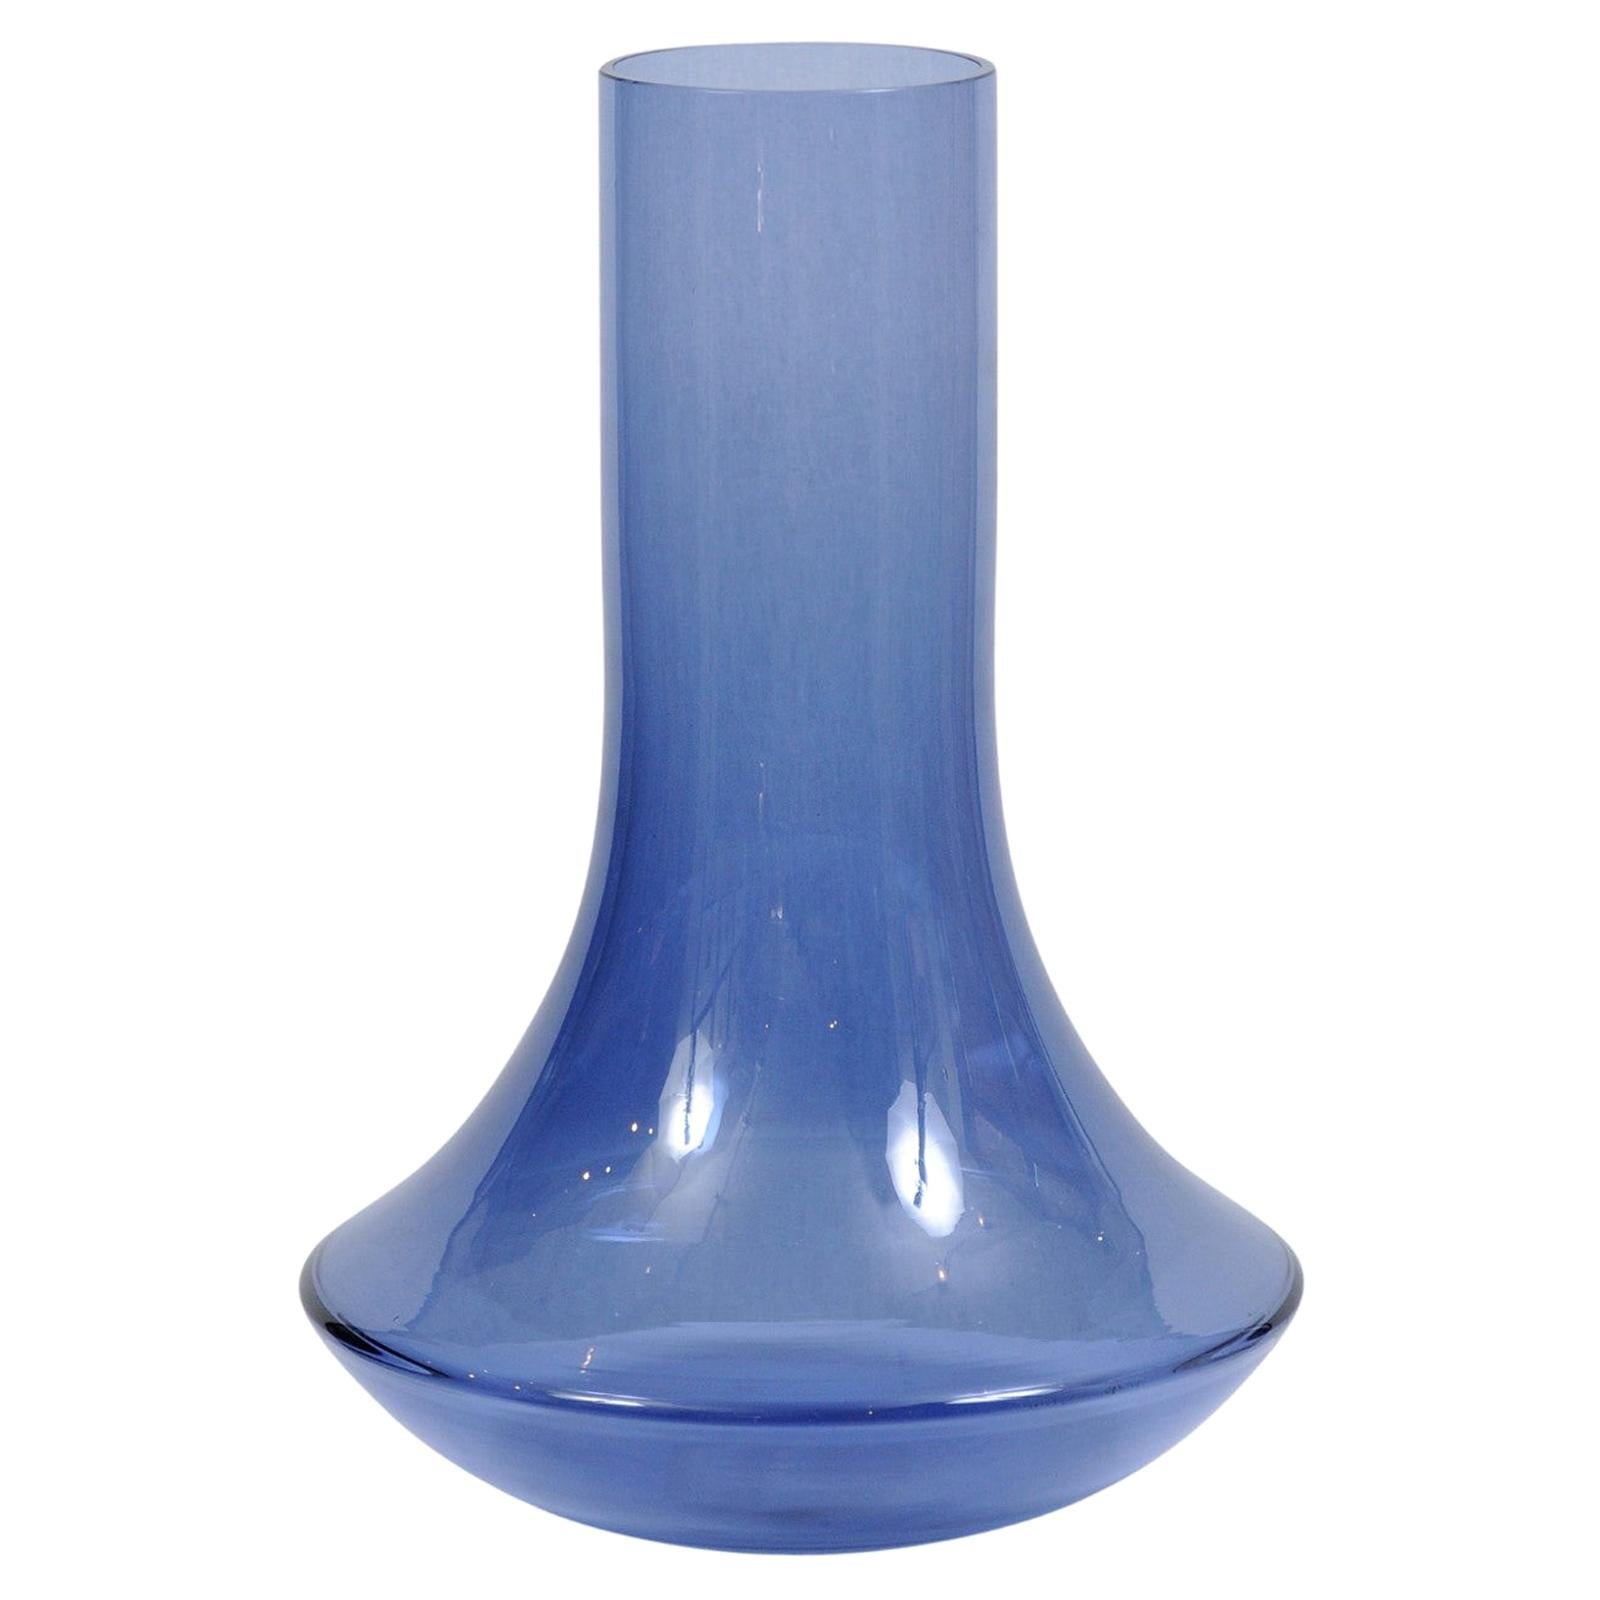 Donghia Large Blue Italian Murano Glass Vase For Sale